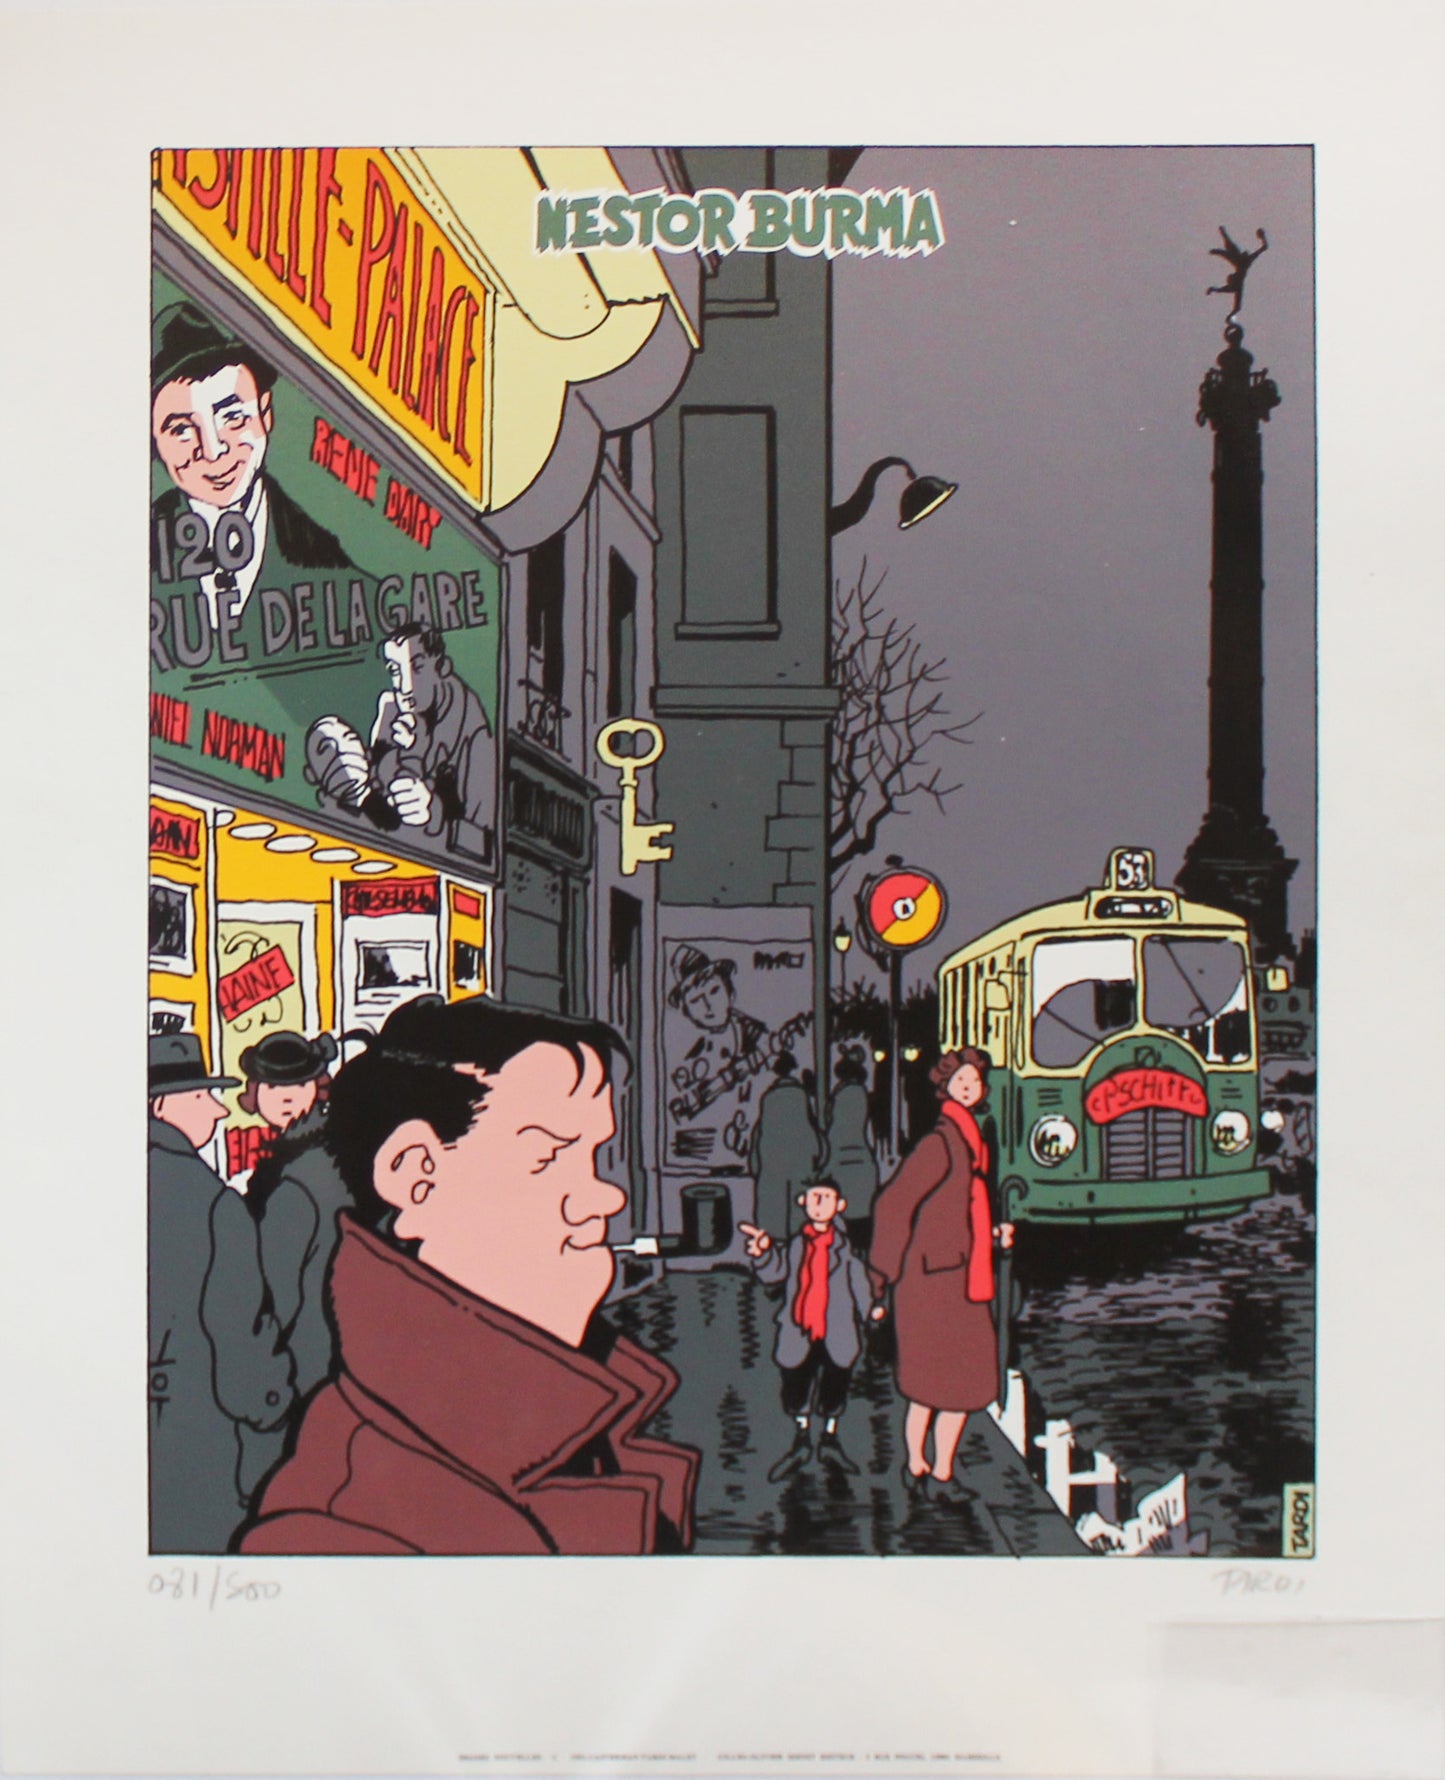 Nestor Burma - 120 rue de la gare - Siebdruck von Jacques Tardi